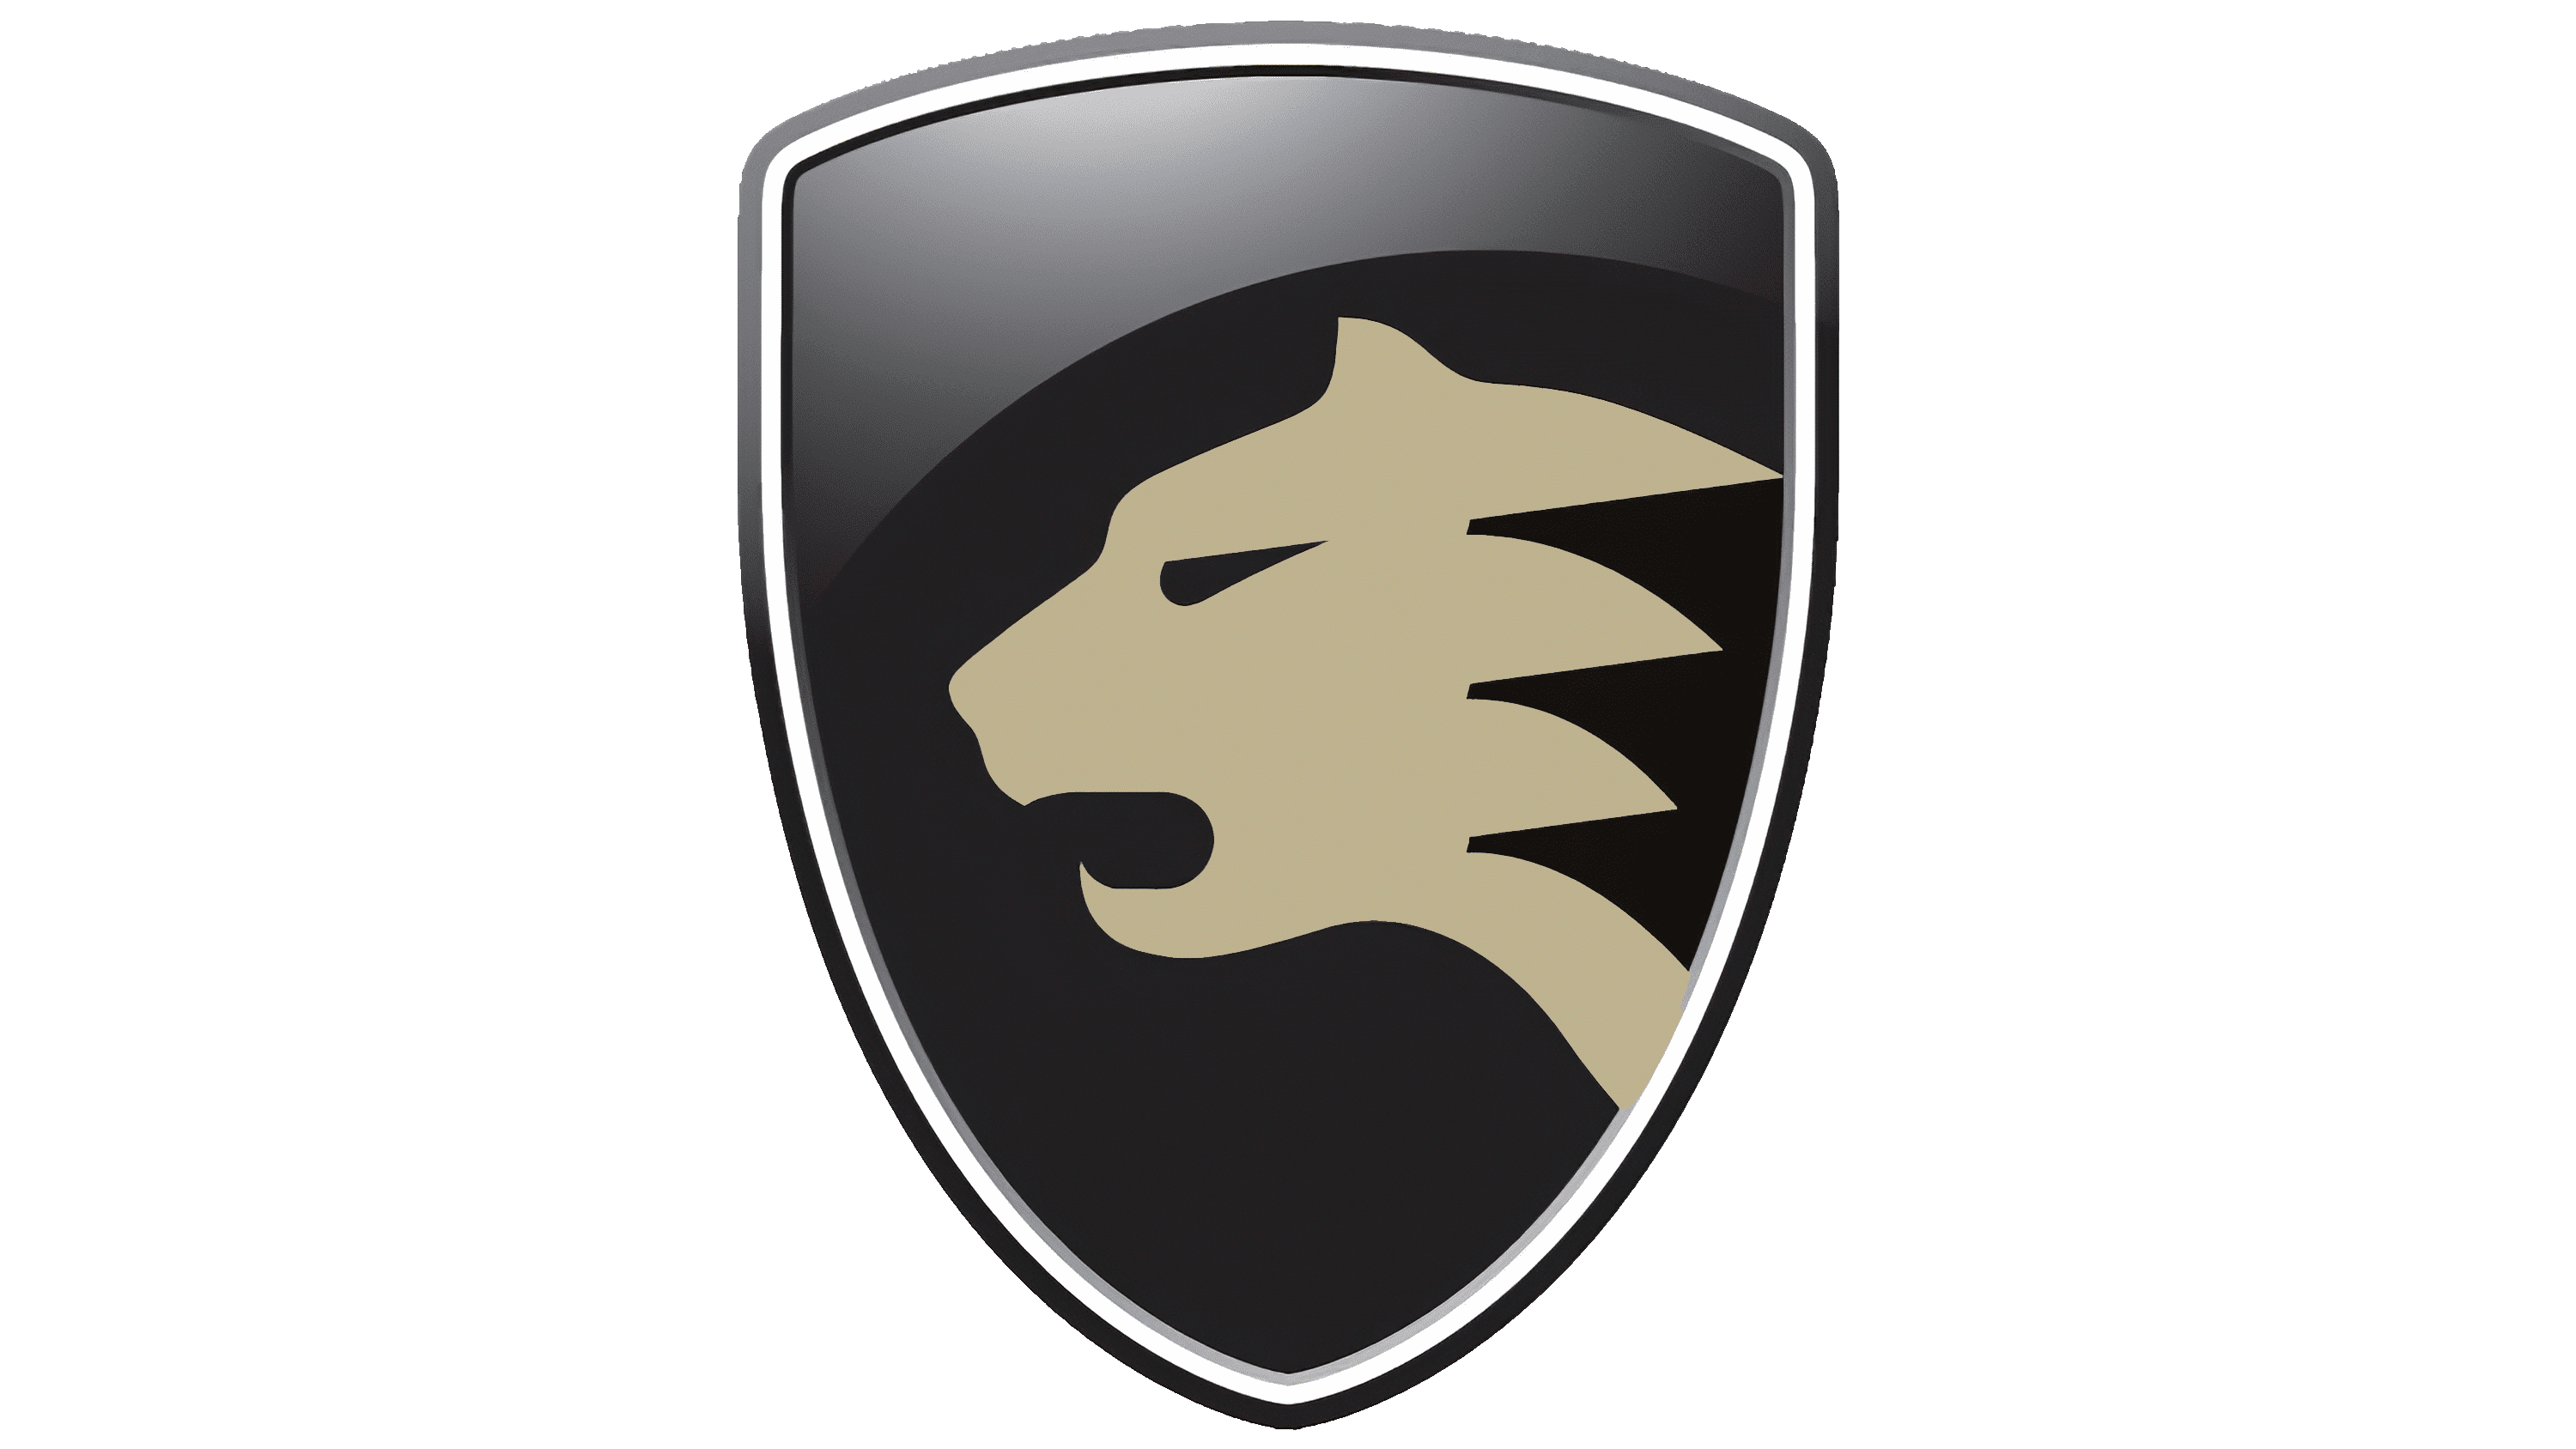 Smart Logo – Automarken, Motorradmarken, Logos, Geschichte, PNG